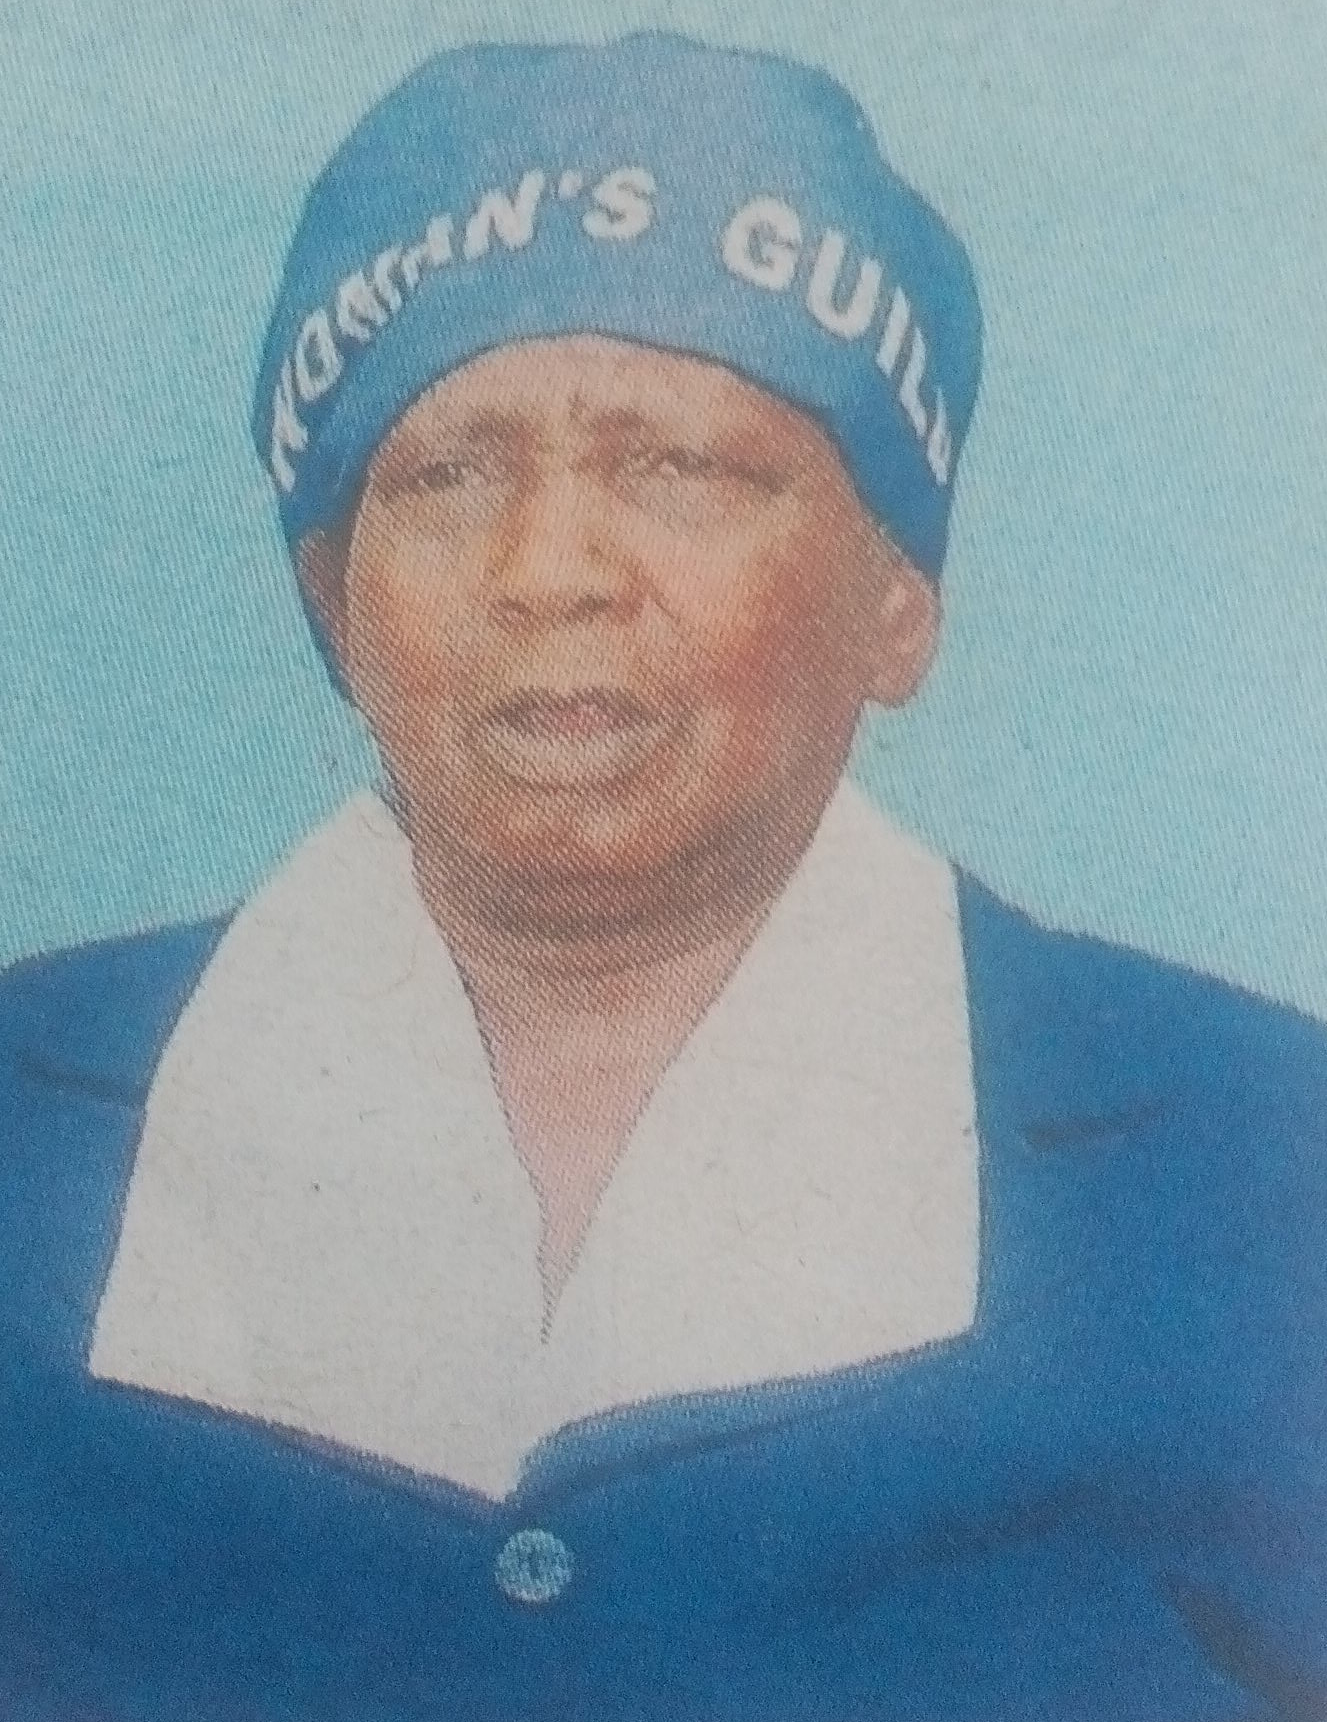 Obituary Image of Julia Mukami Mbote (Nyina wa Nyoro)